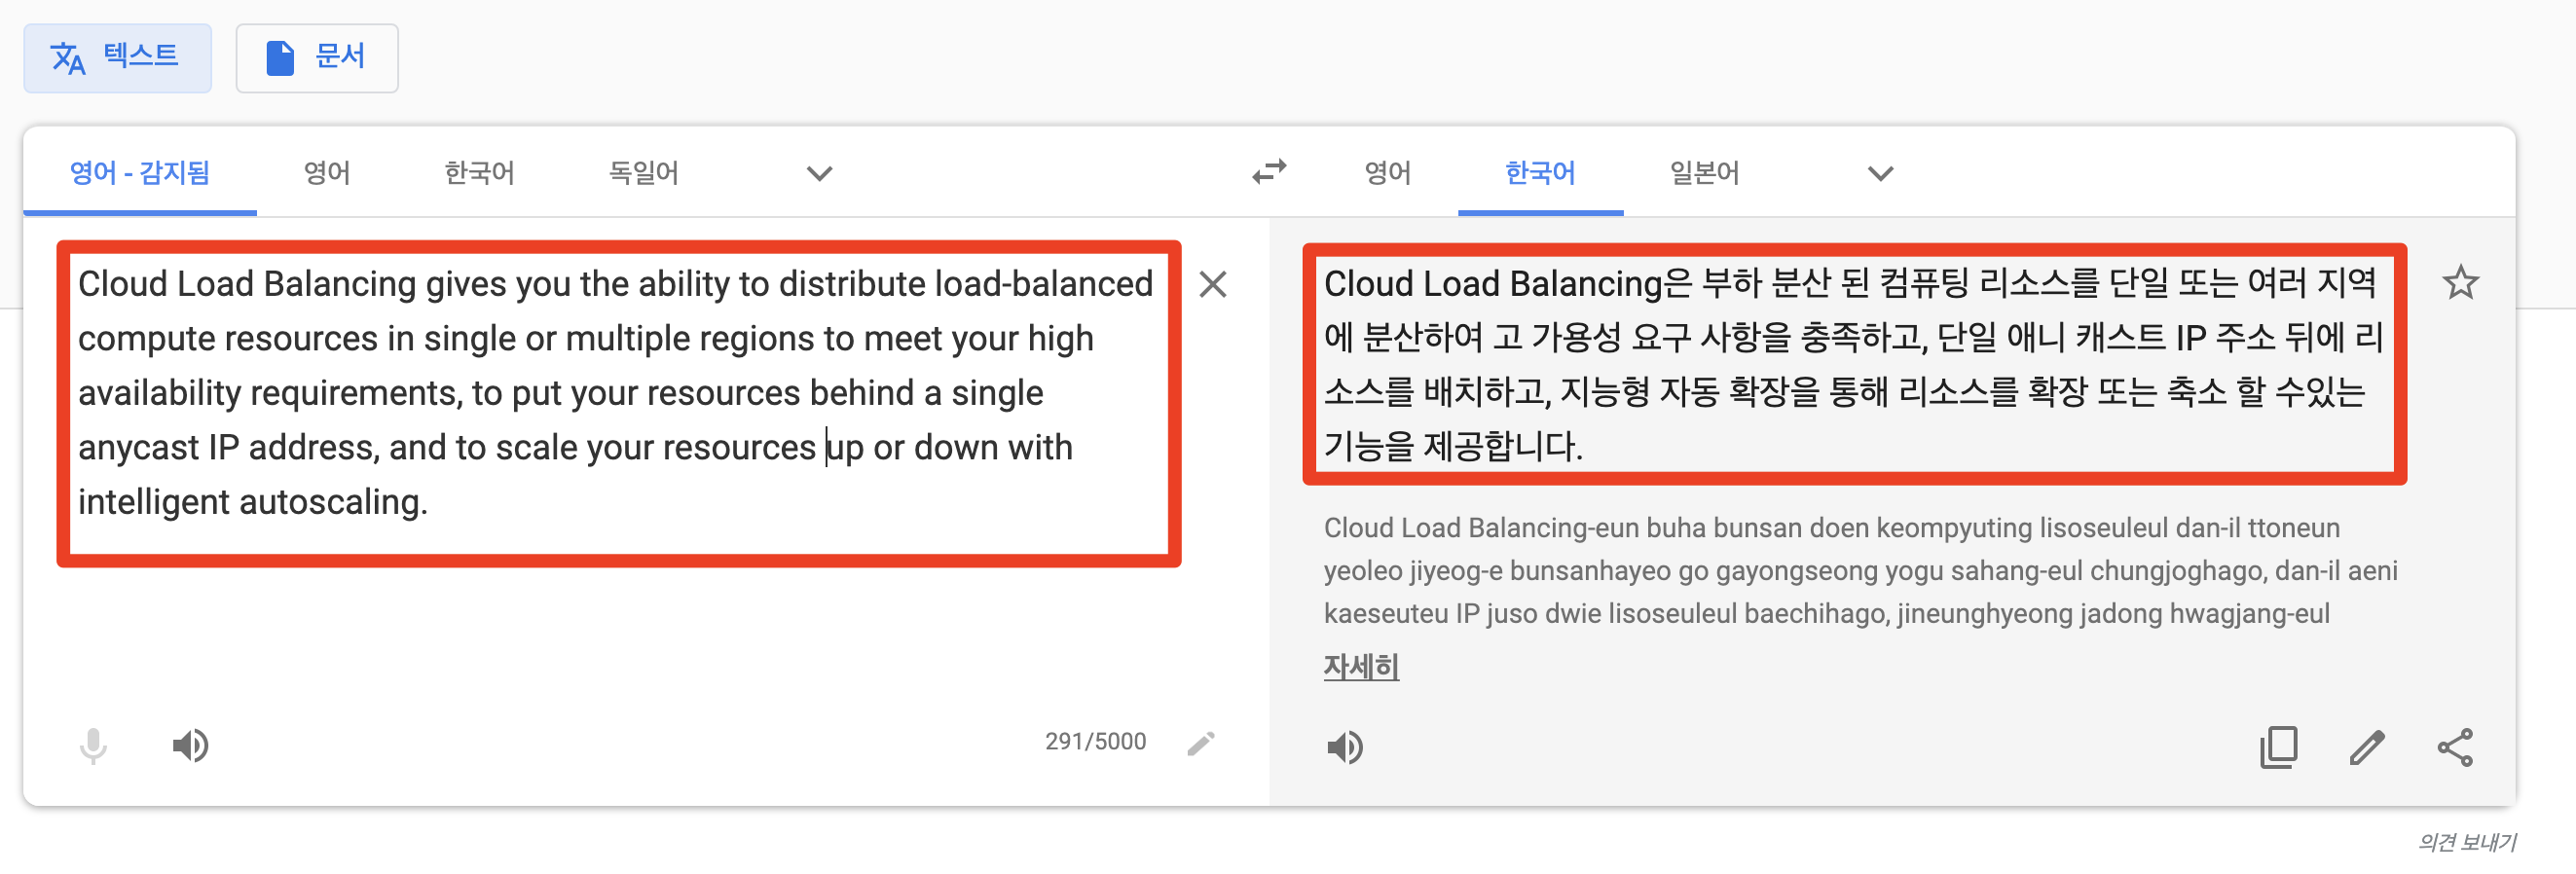 Google Services] 구글 번역기 사용법